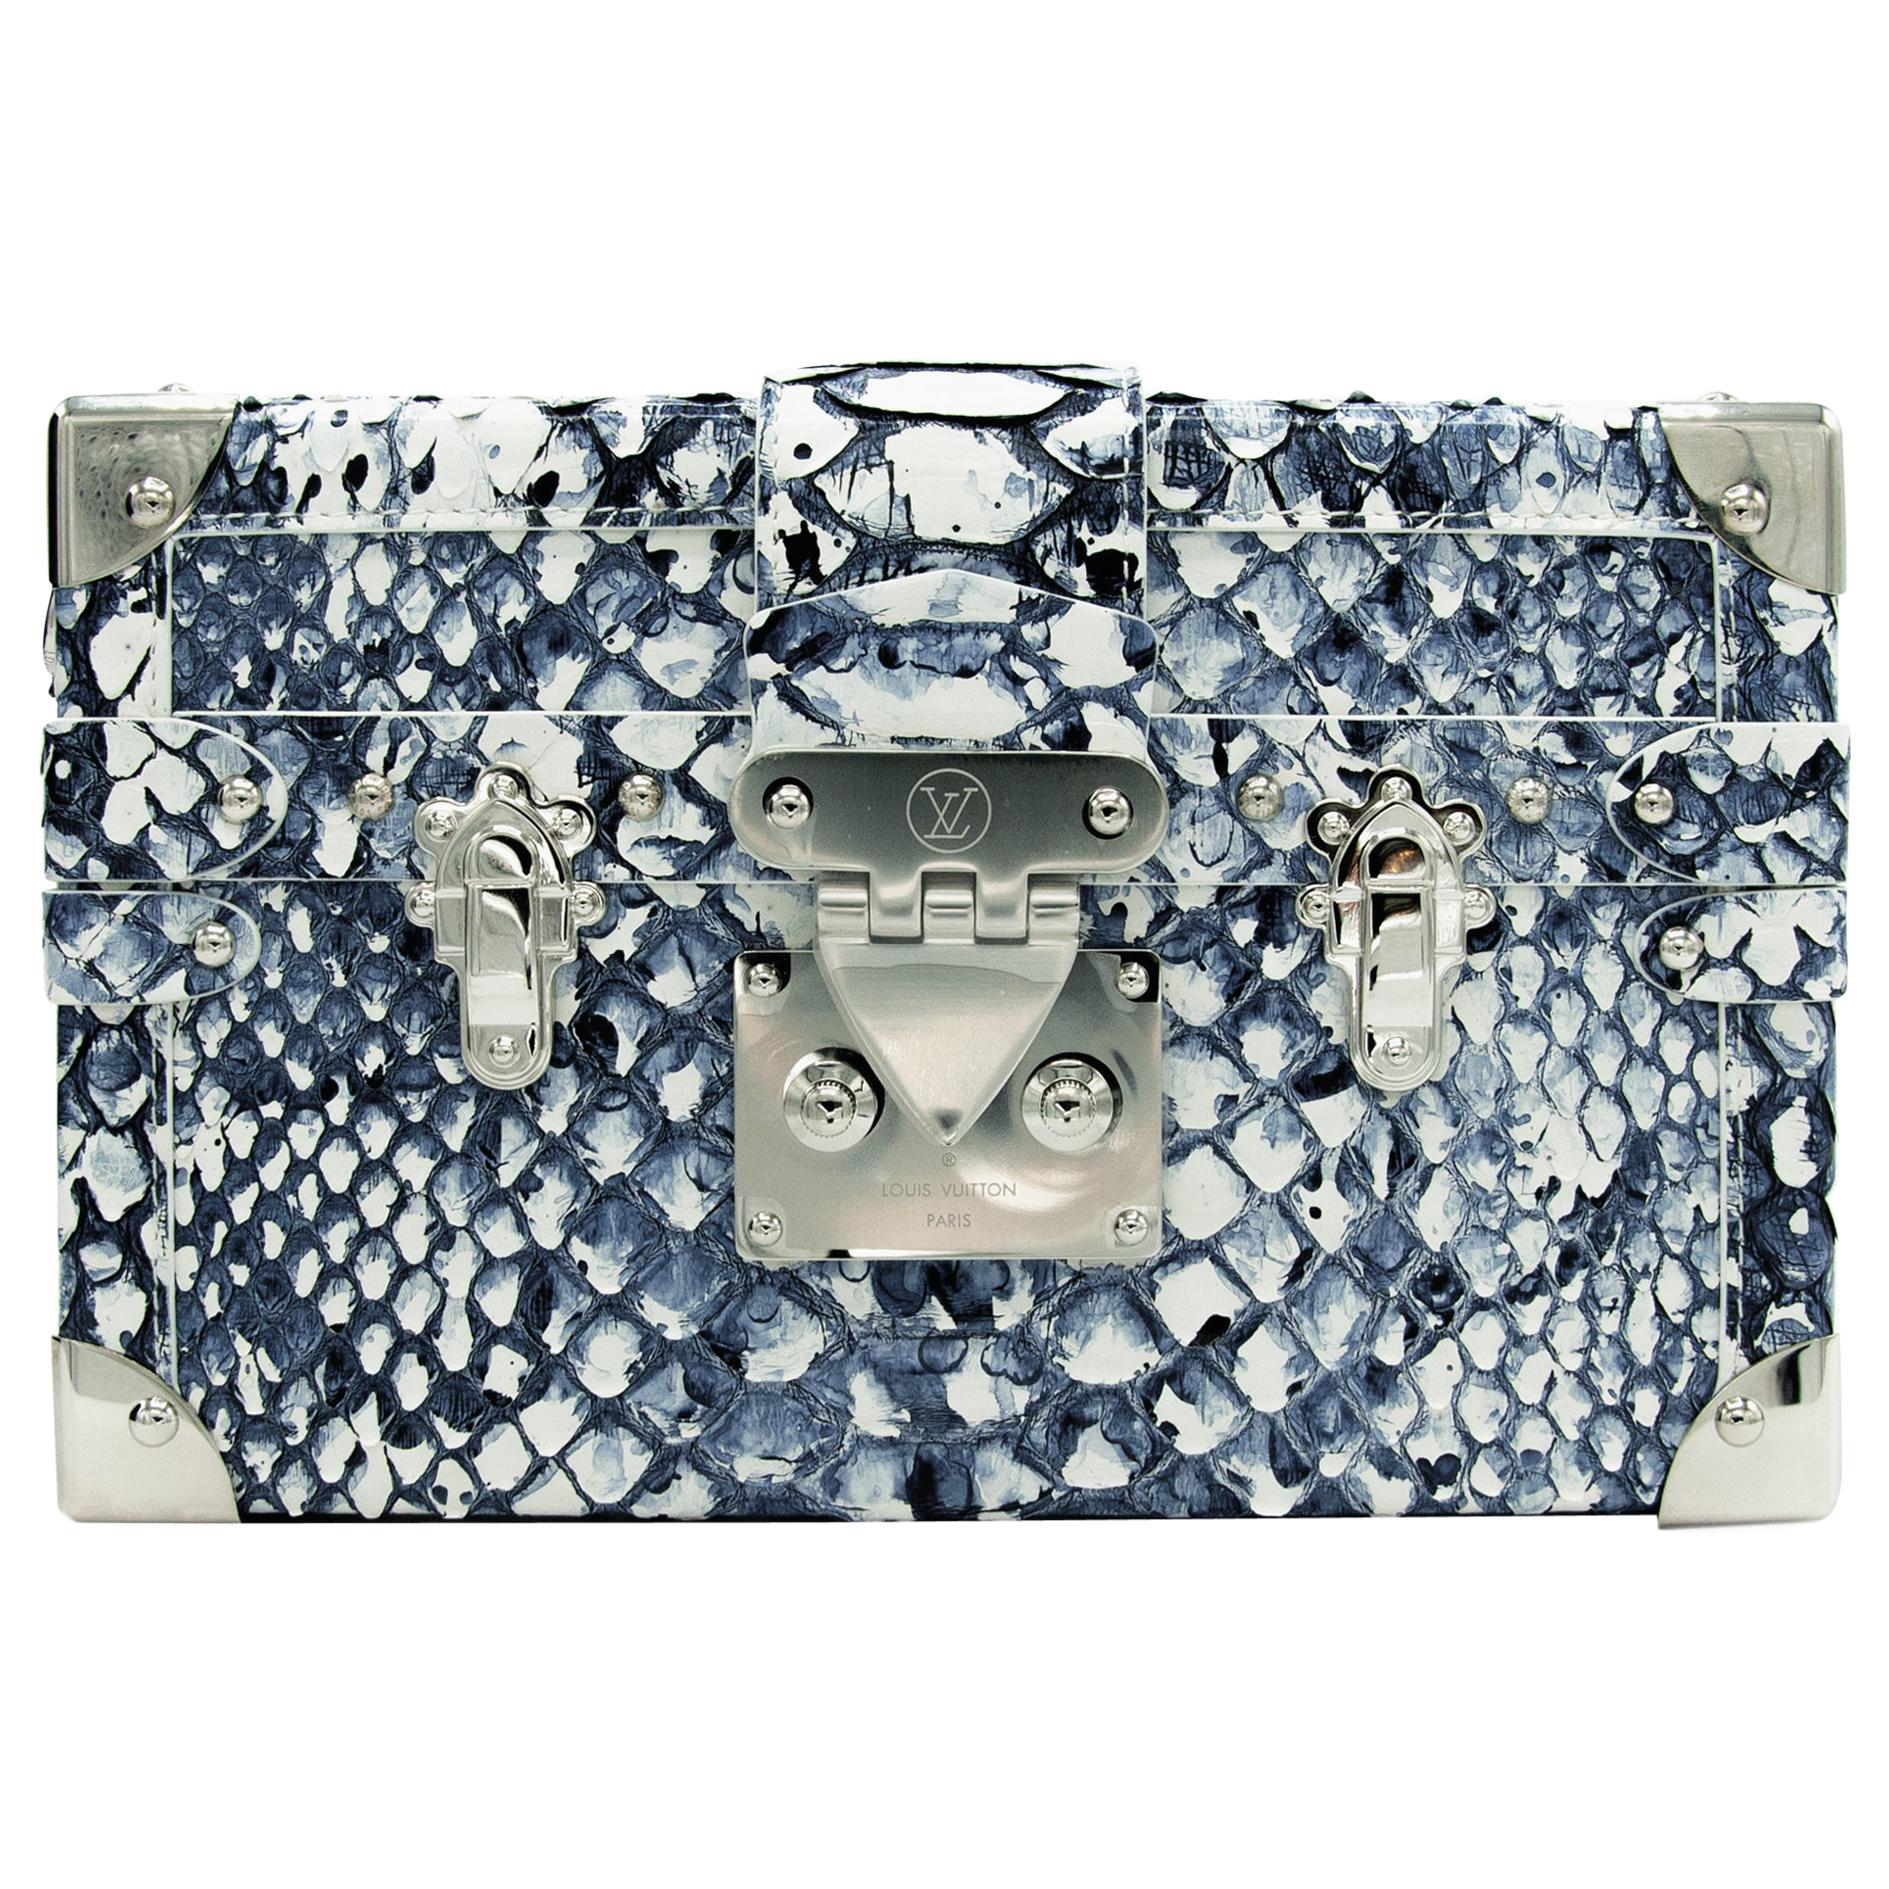 Petite Malle Python - Women - Handbags